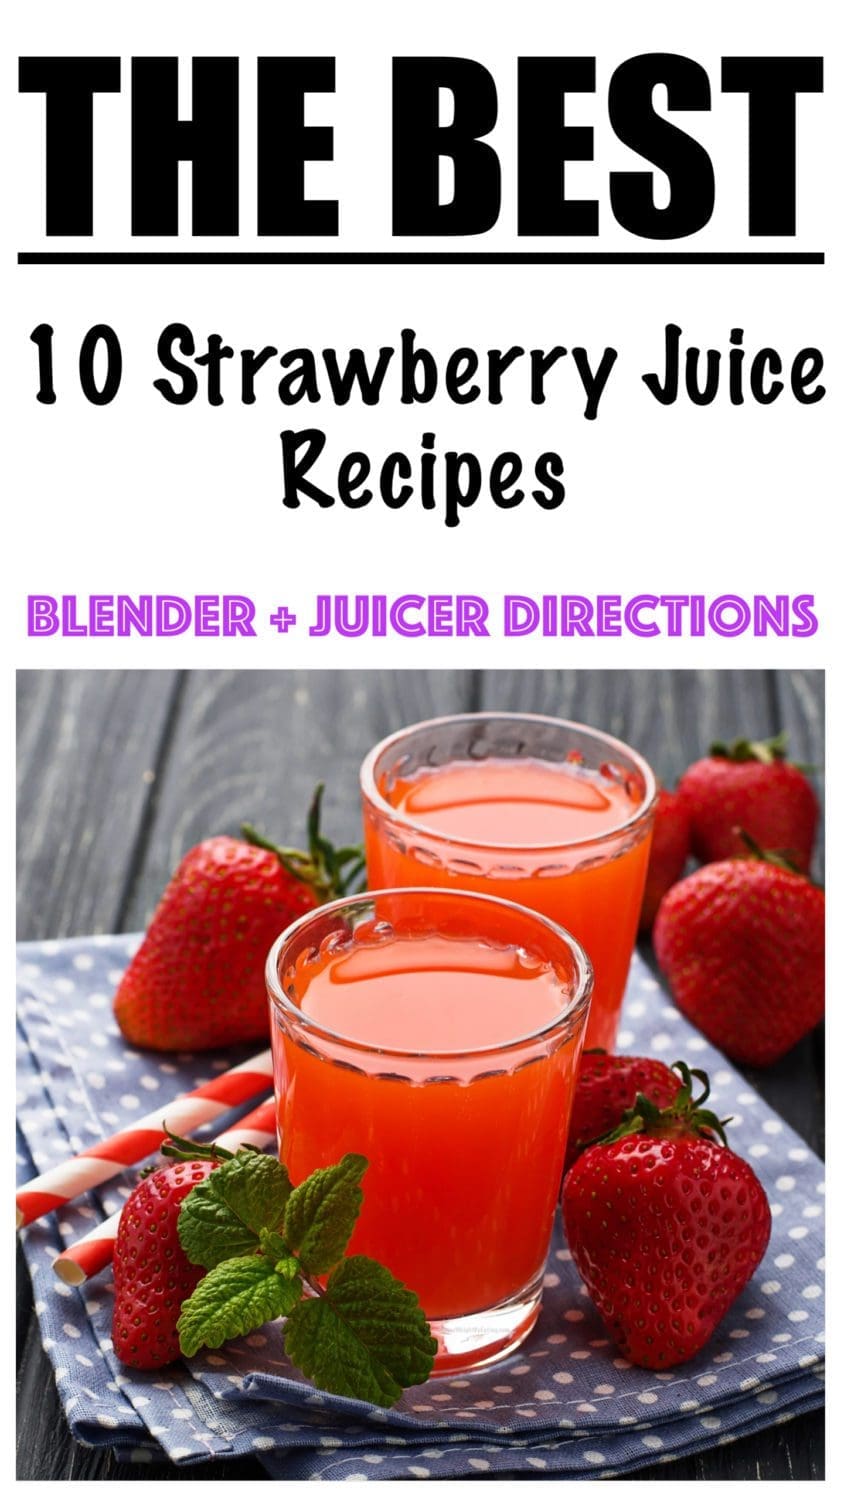 10 Strawberry Juice Recipes (Blender + Juicer Directions)